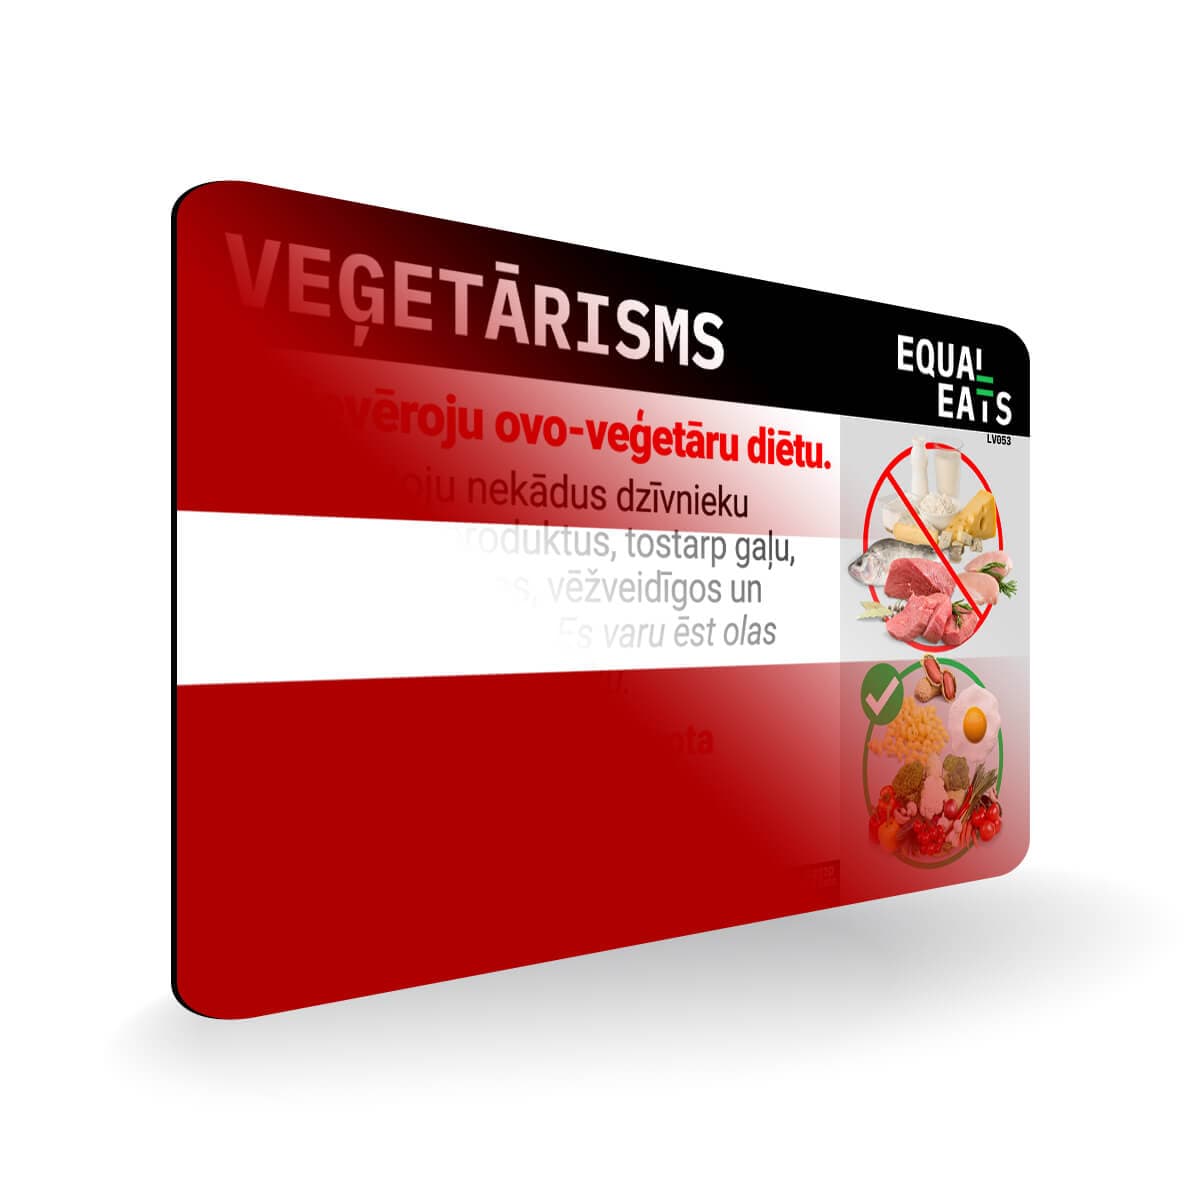 Ovo Vegetarian in Latvian. Card for Vegetarian in Latvia